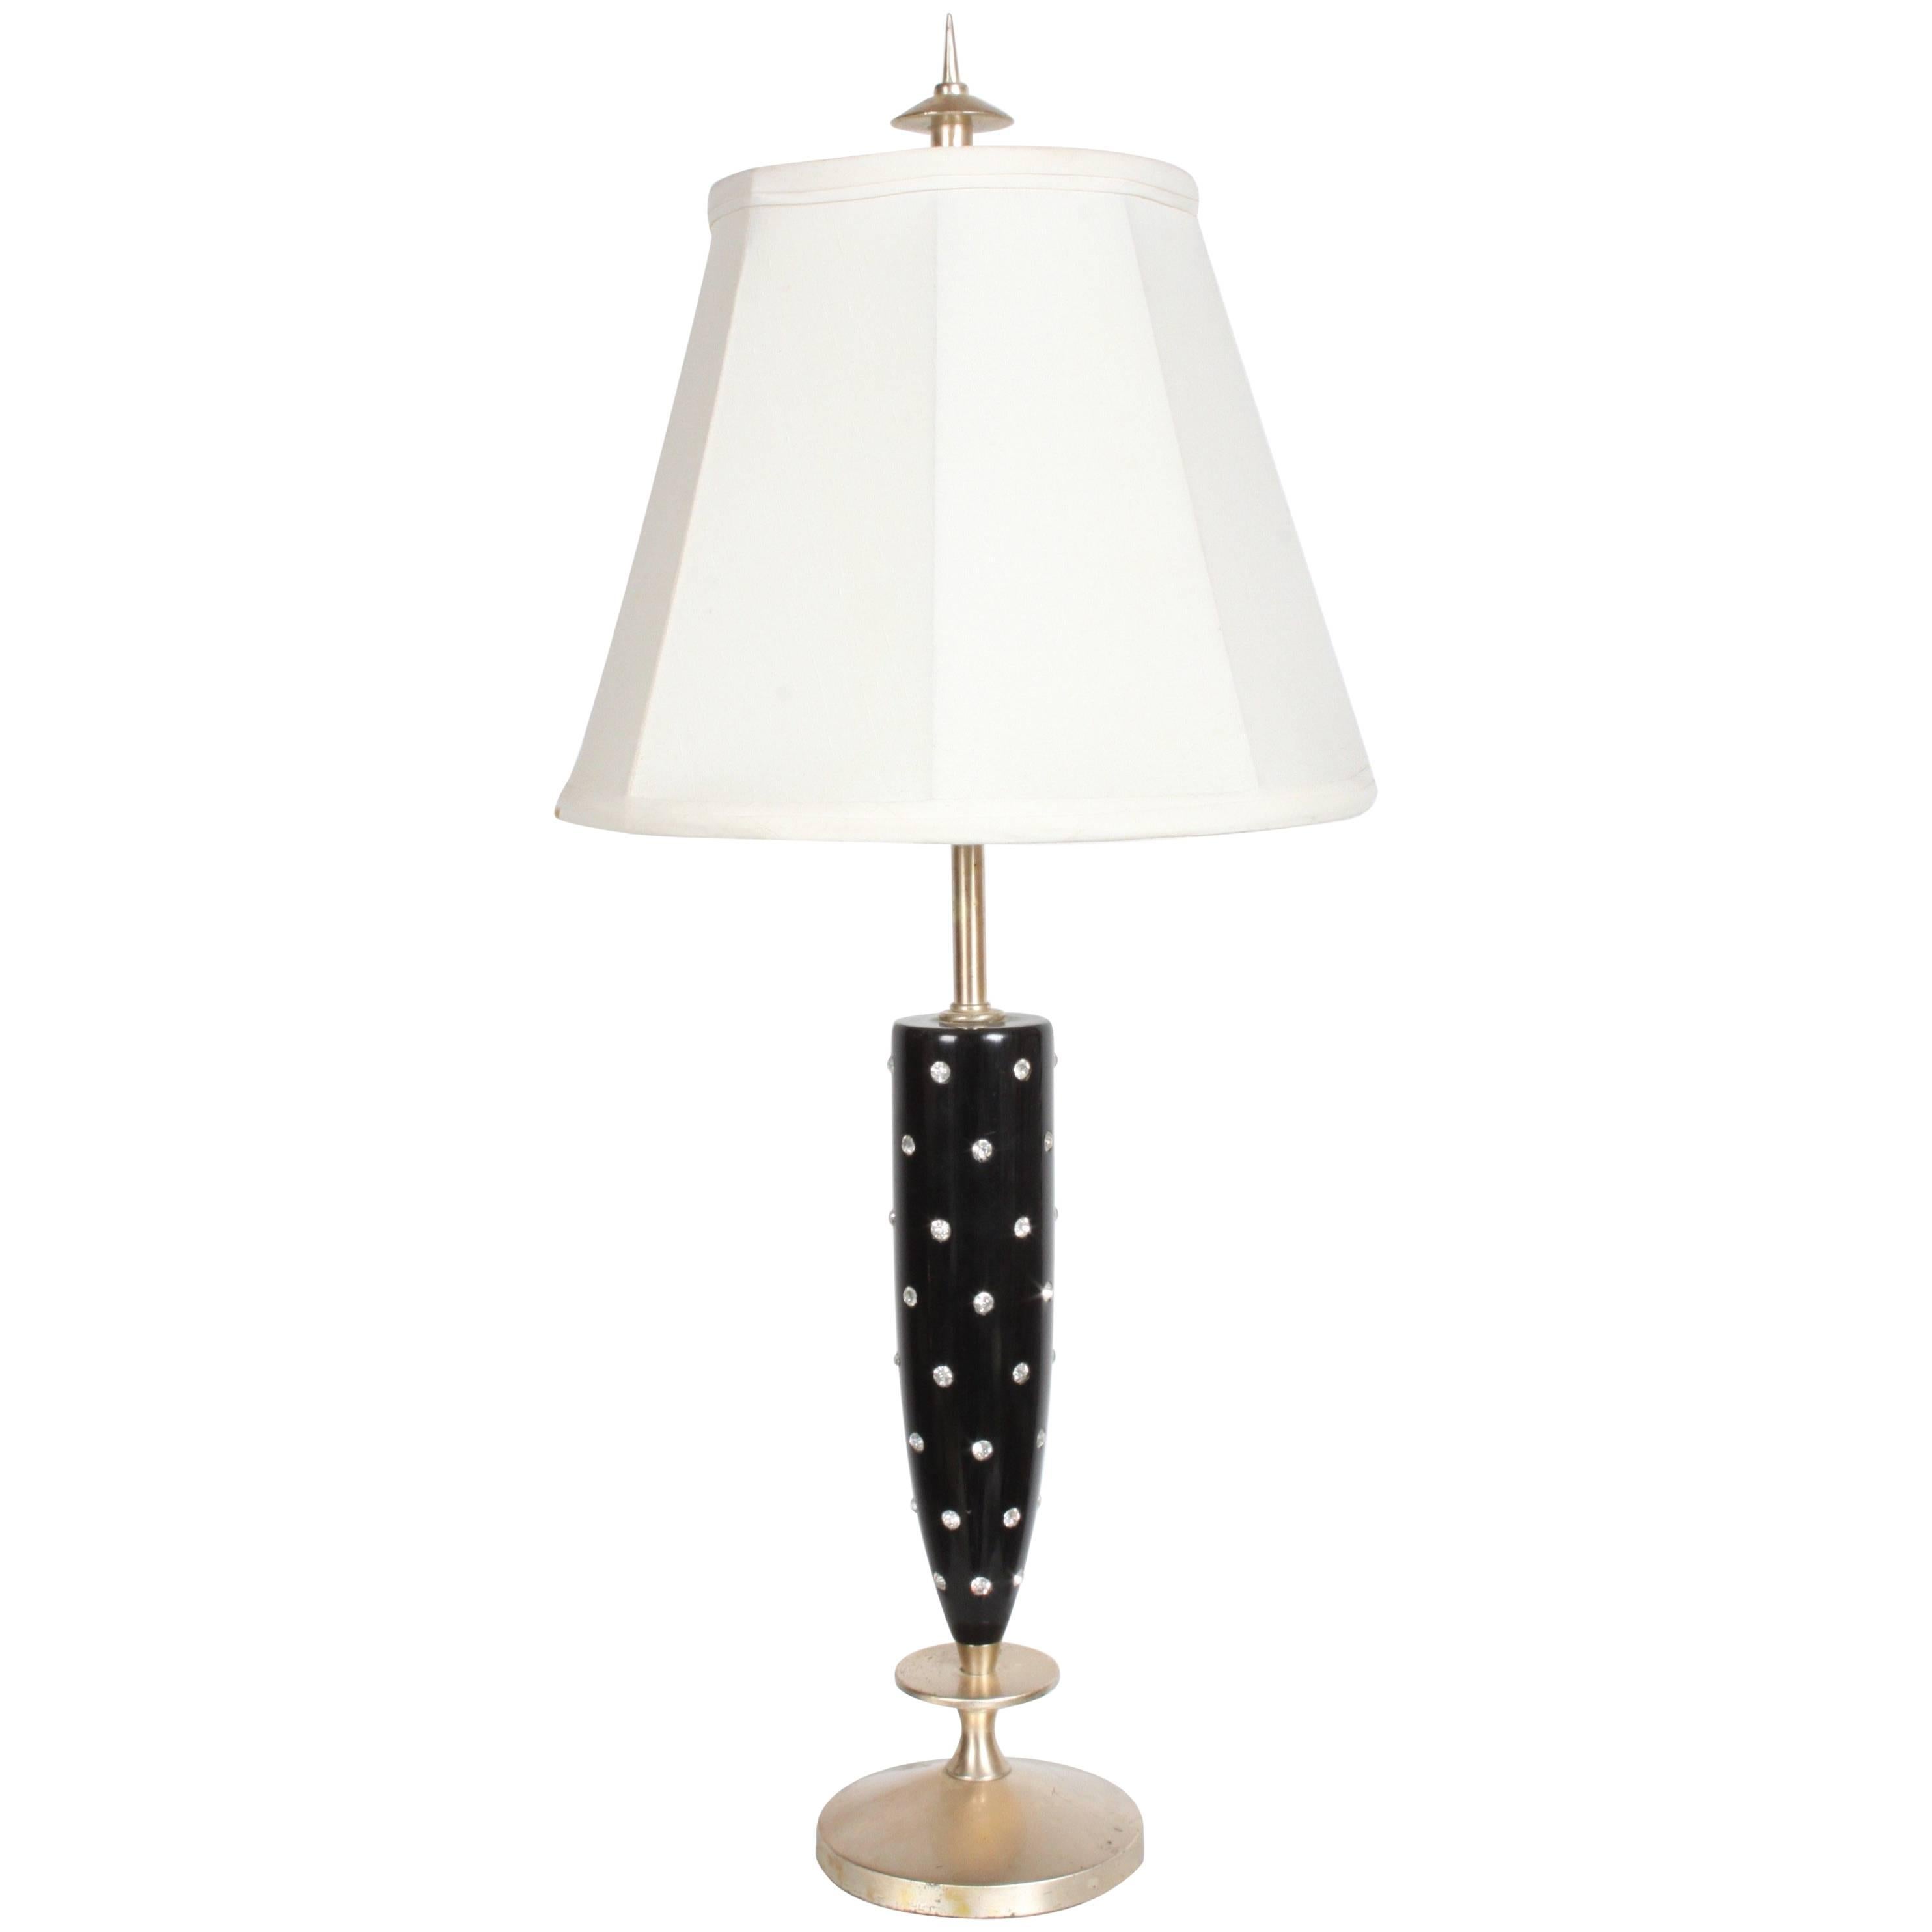 Tommi Parzinger Rhinestone Studded Lamp For Sale